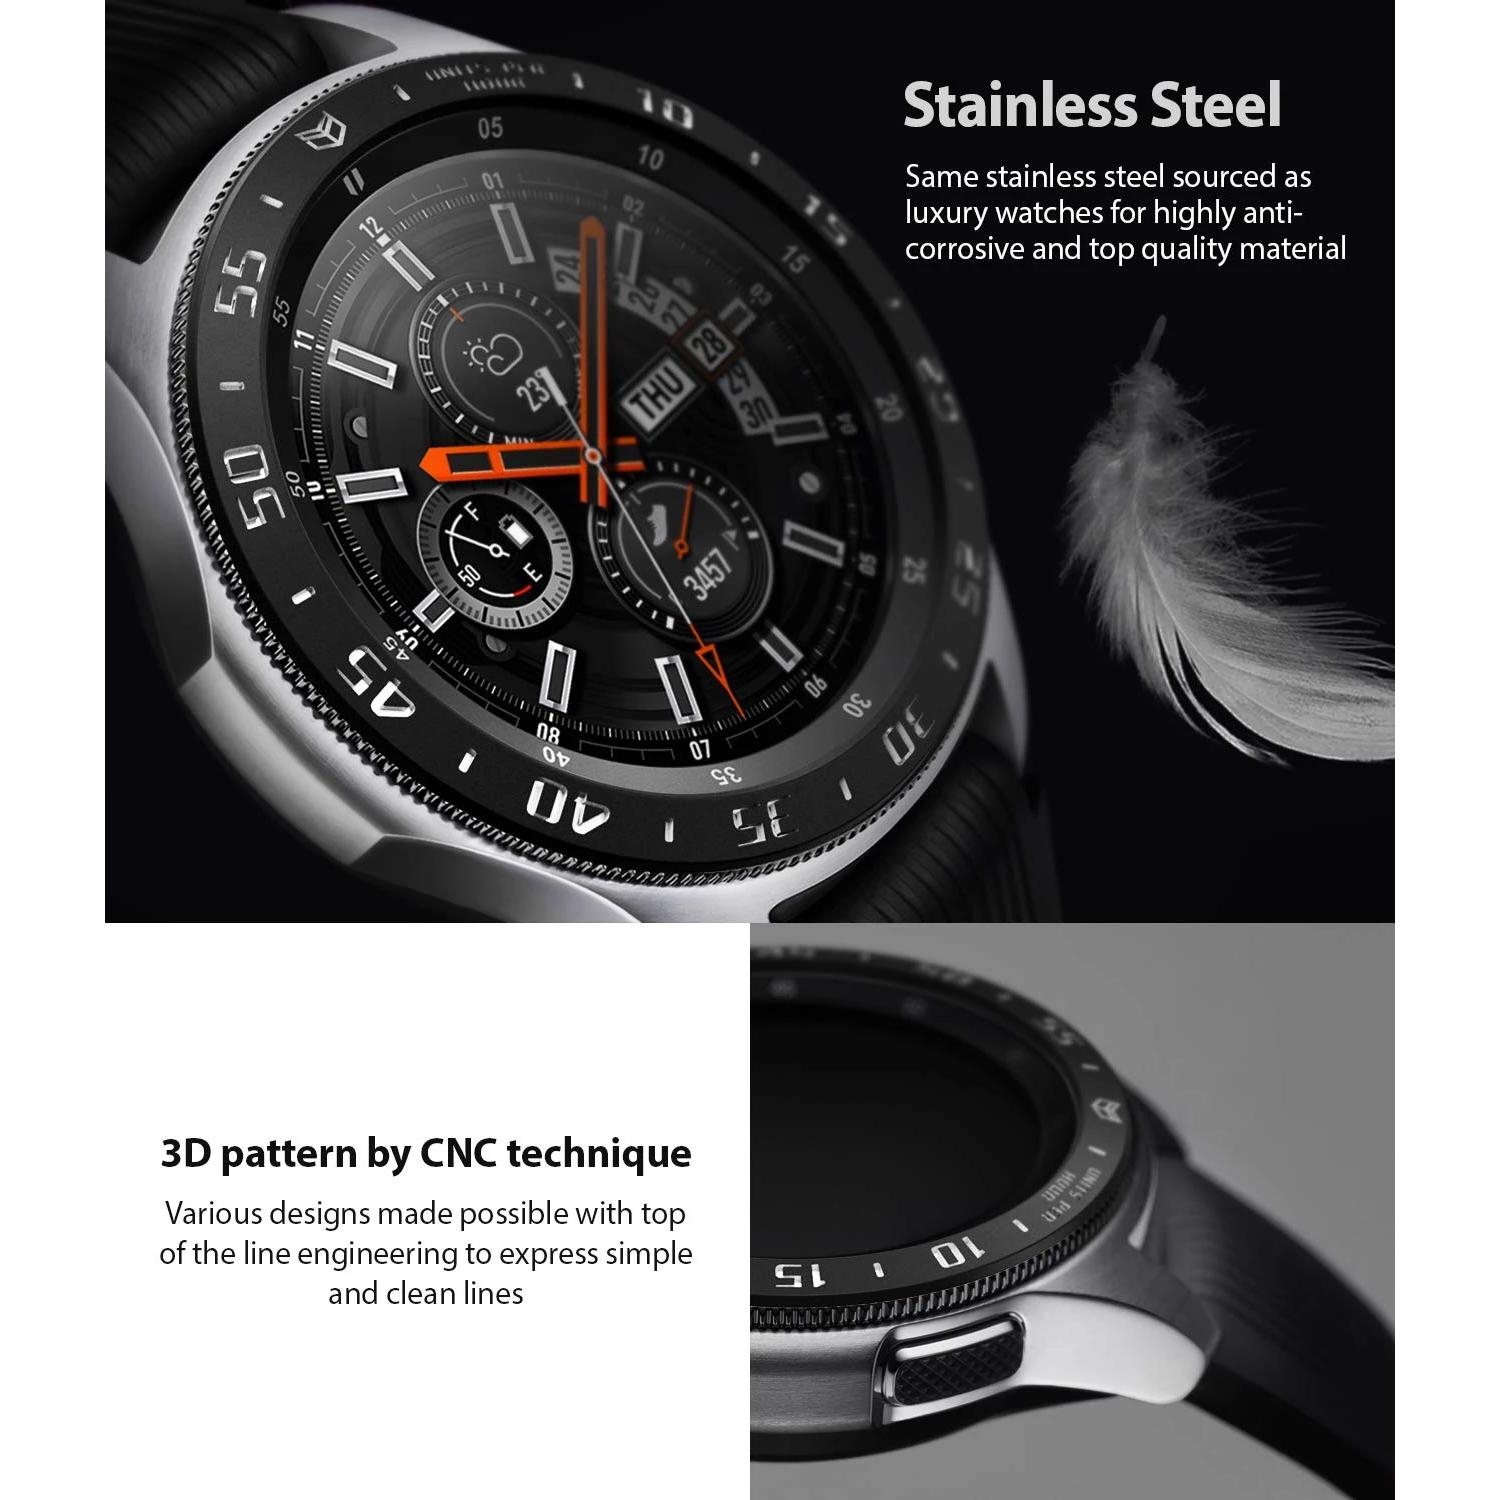 Bezel Styling Samsung Galaxy Watch 46mm Black